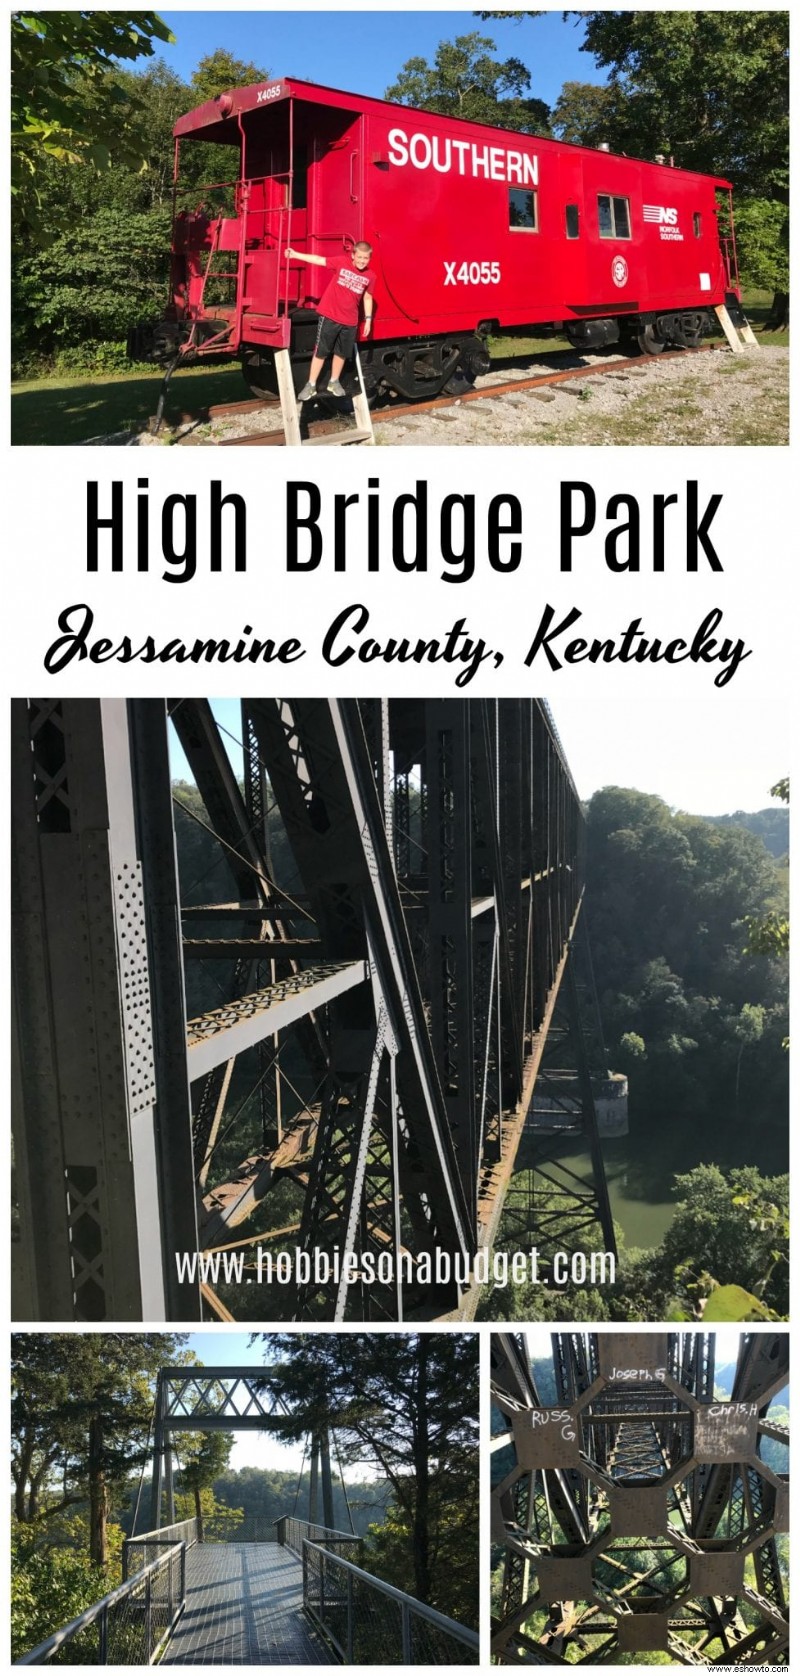 Parque High Bridge:condado de Jessamine, Kentucky